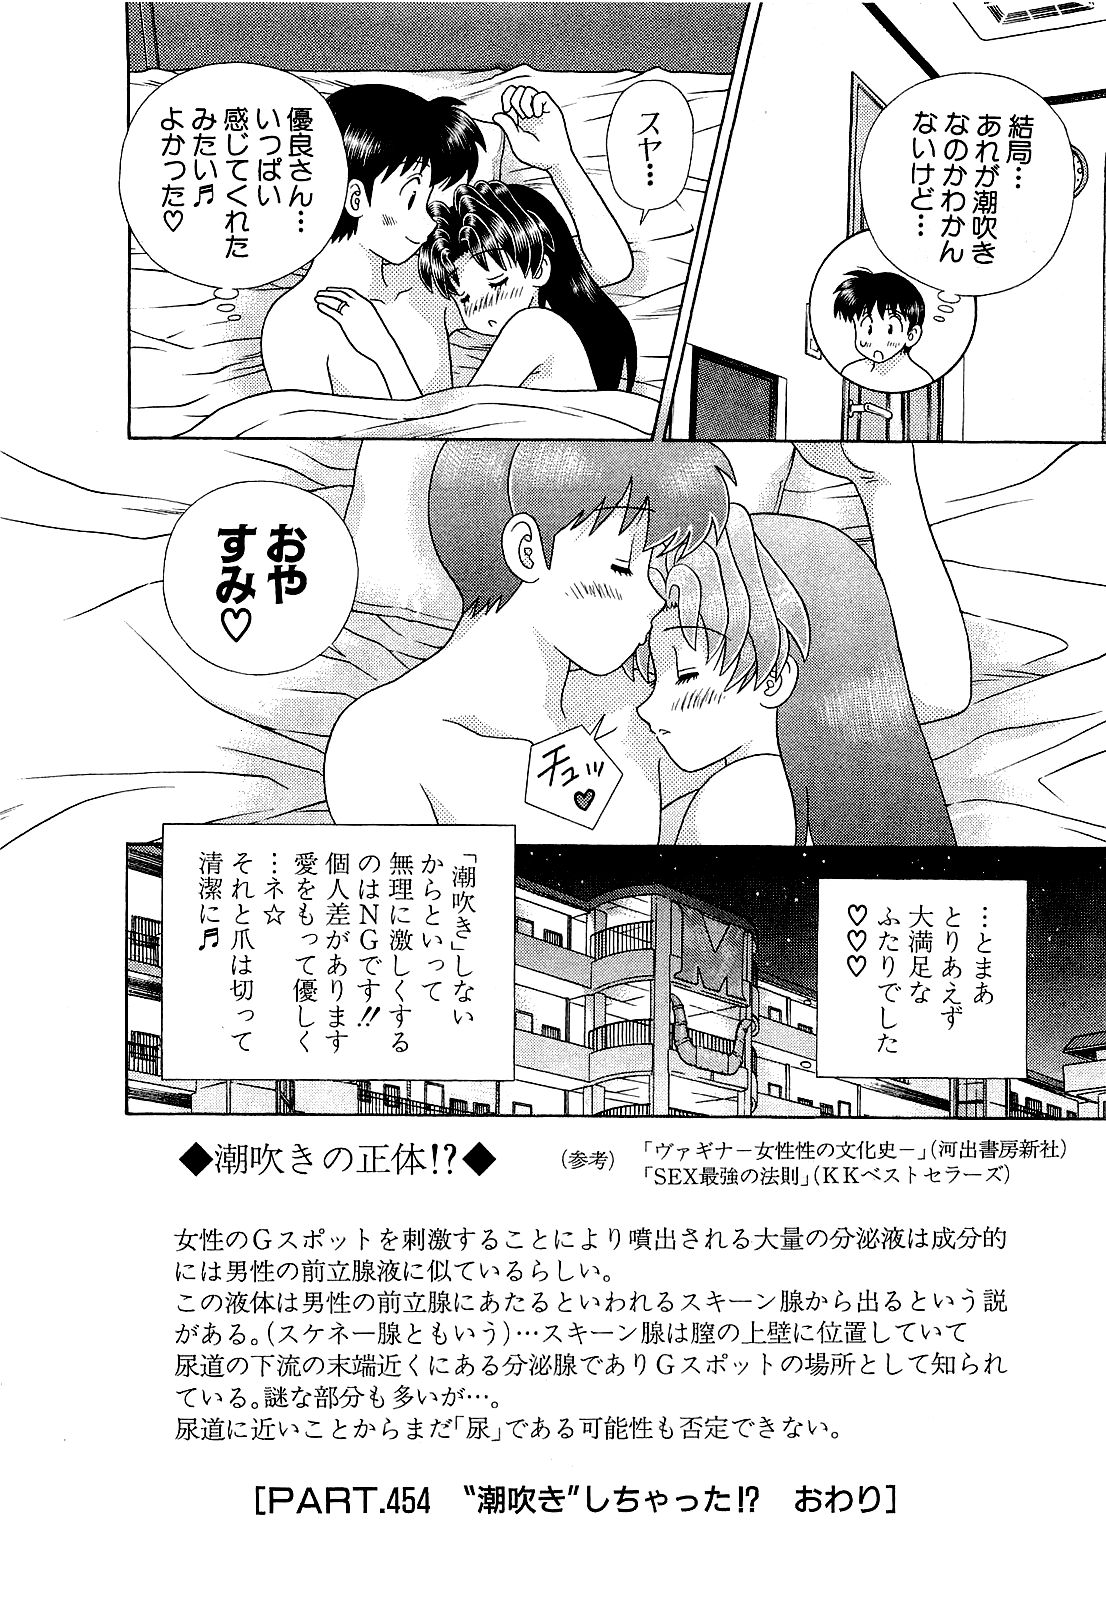 Katsu Aki Futari Ecchi 47 Hentai Manga Read Free Hentai Xxx Manga Online